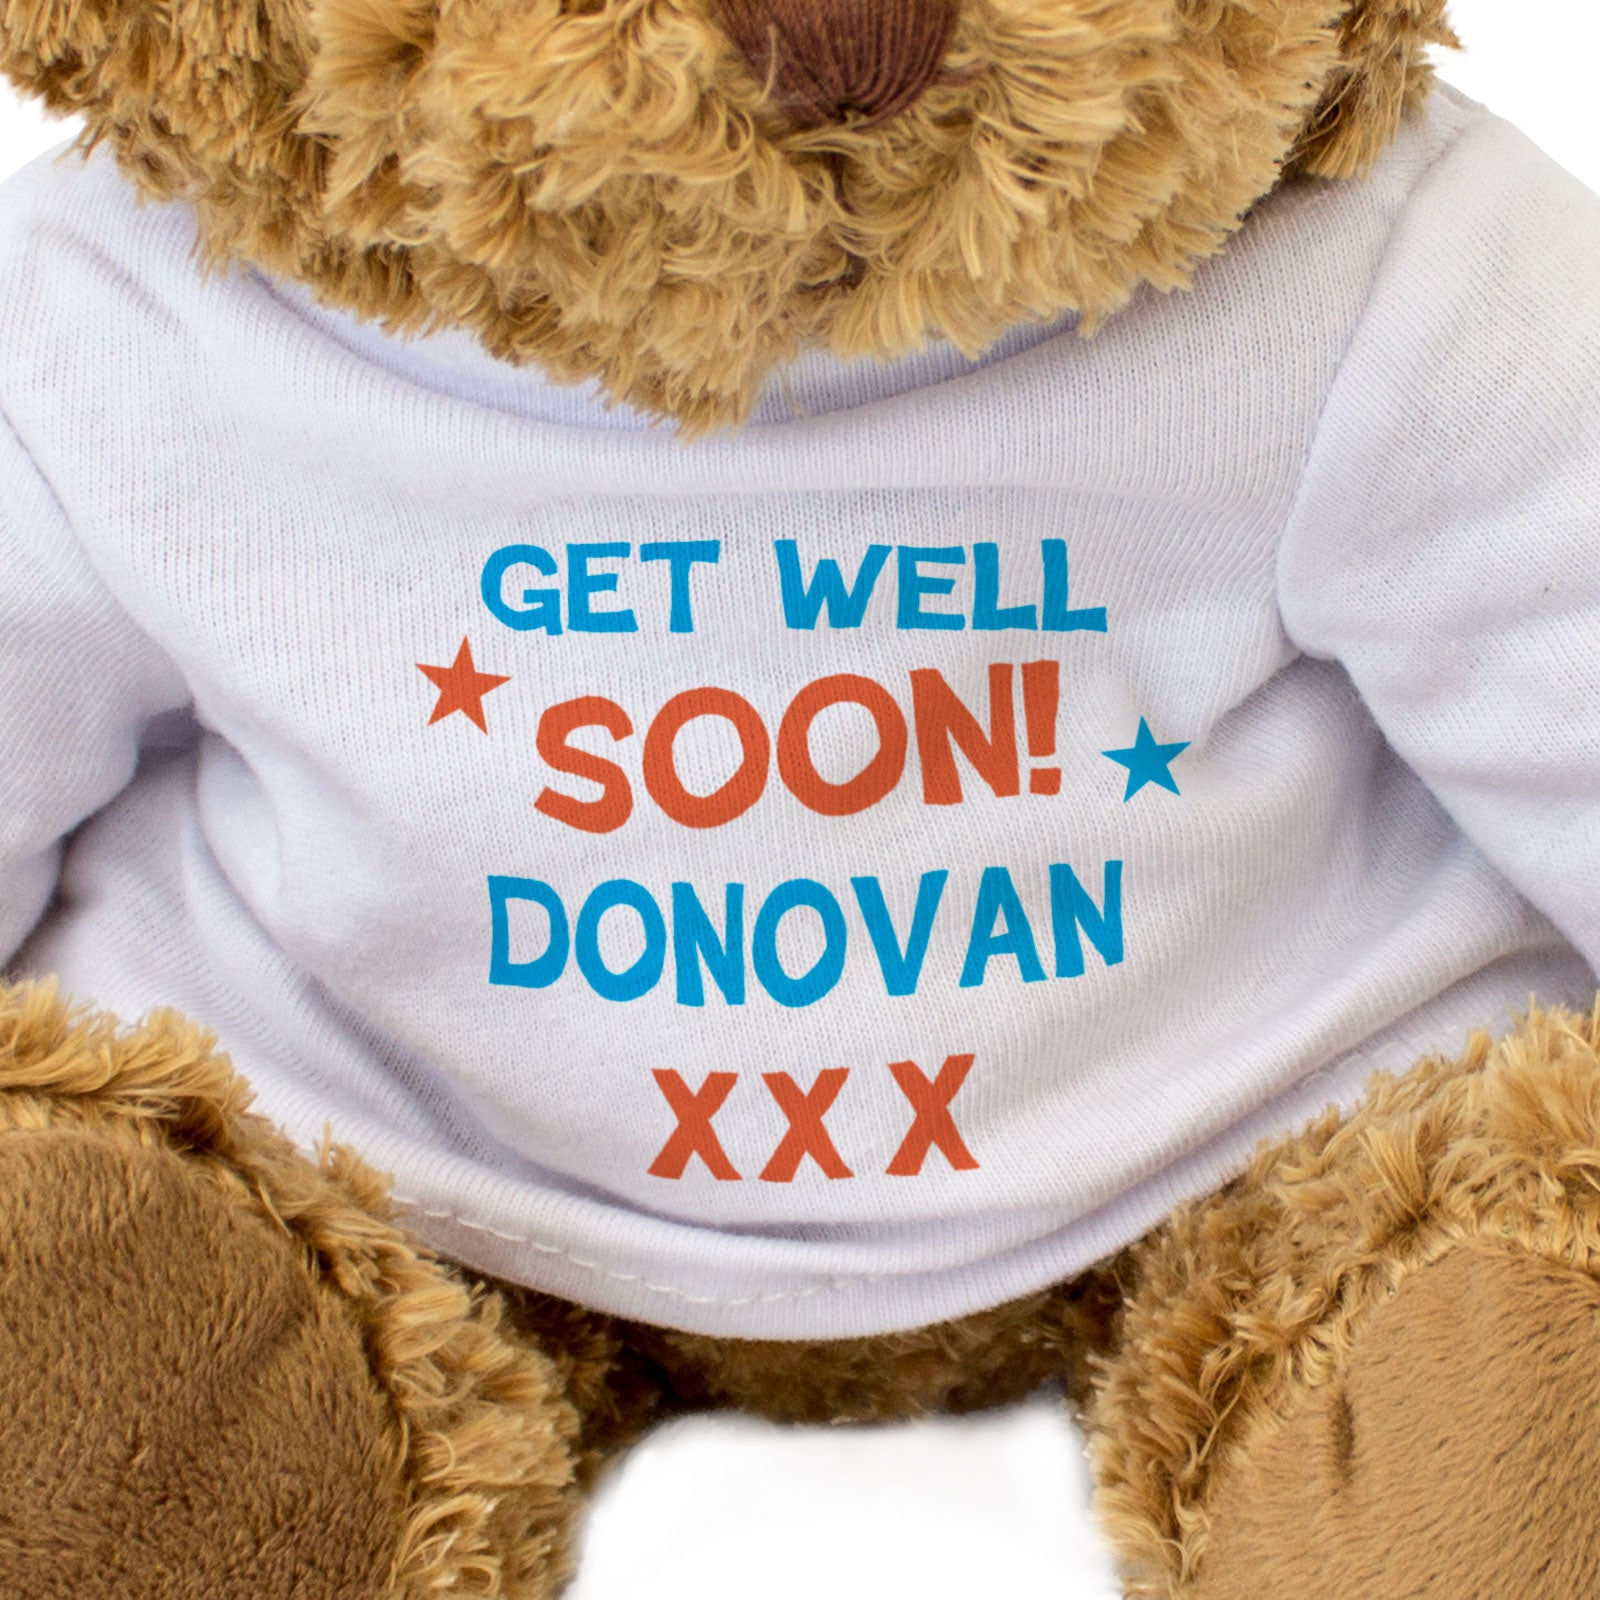 Get Well Soon Donovan - Teddy Bear